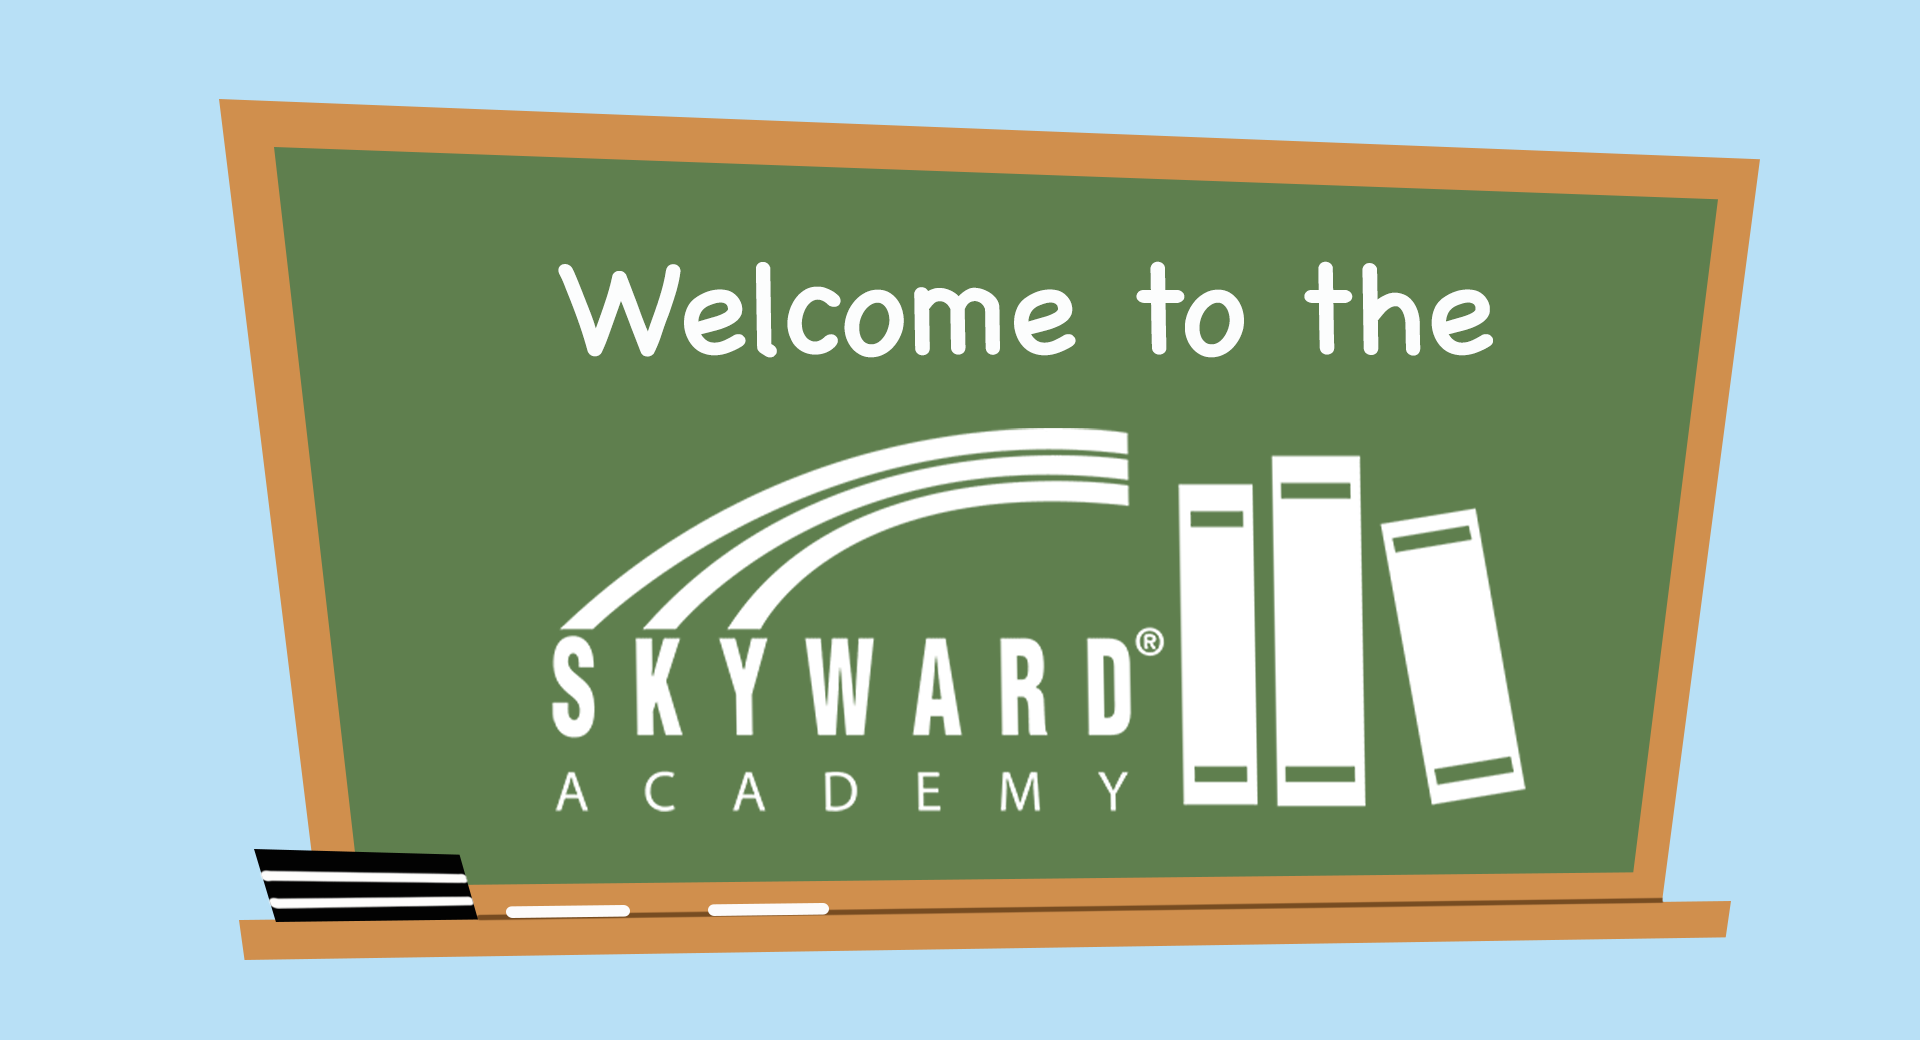 Free Training in the Skyward Academy!